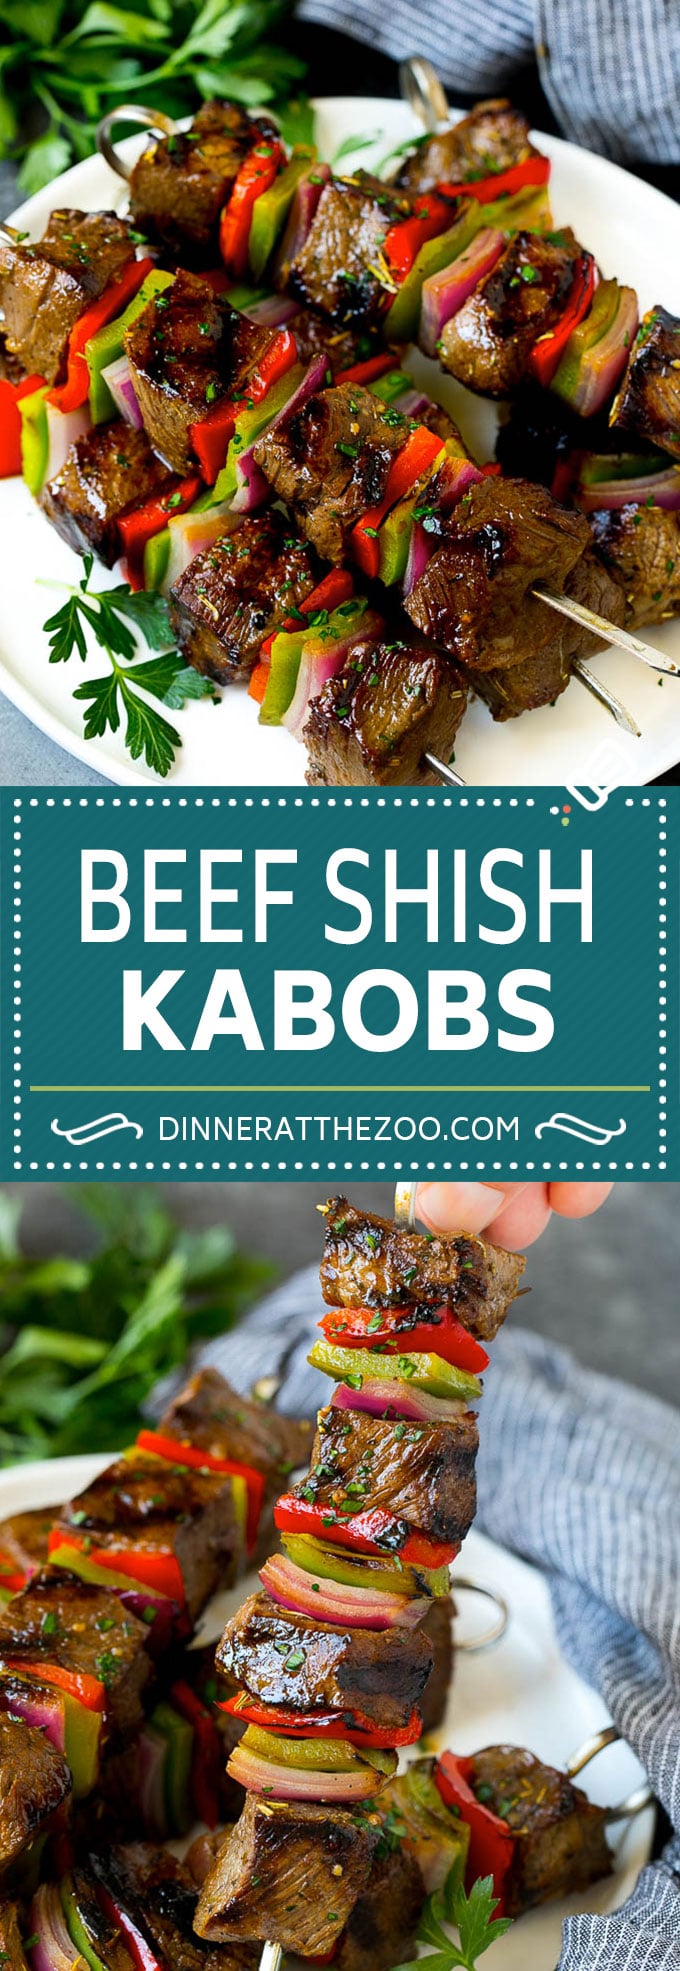 Beef Shish Kabobs Recipe | Beef Kabobs #grilling #beef #steak #dinner #dinneratthezoo #peppers